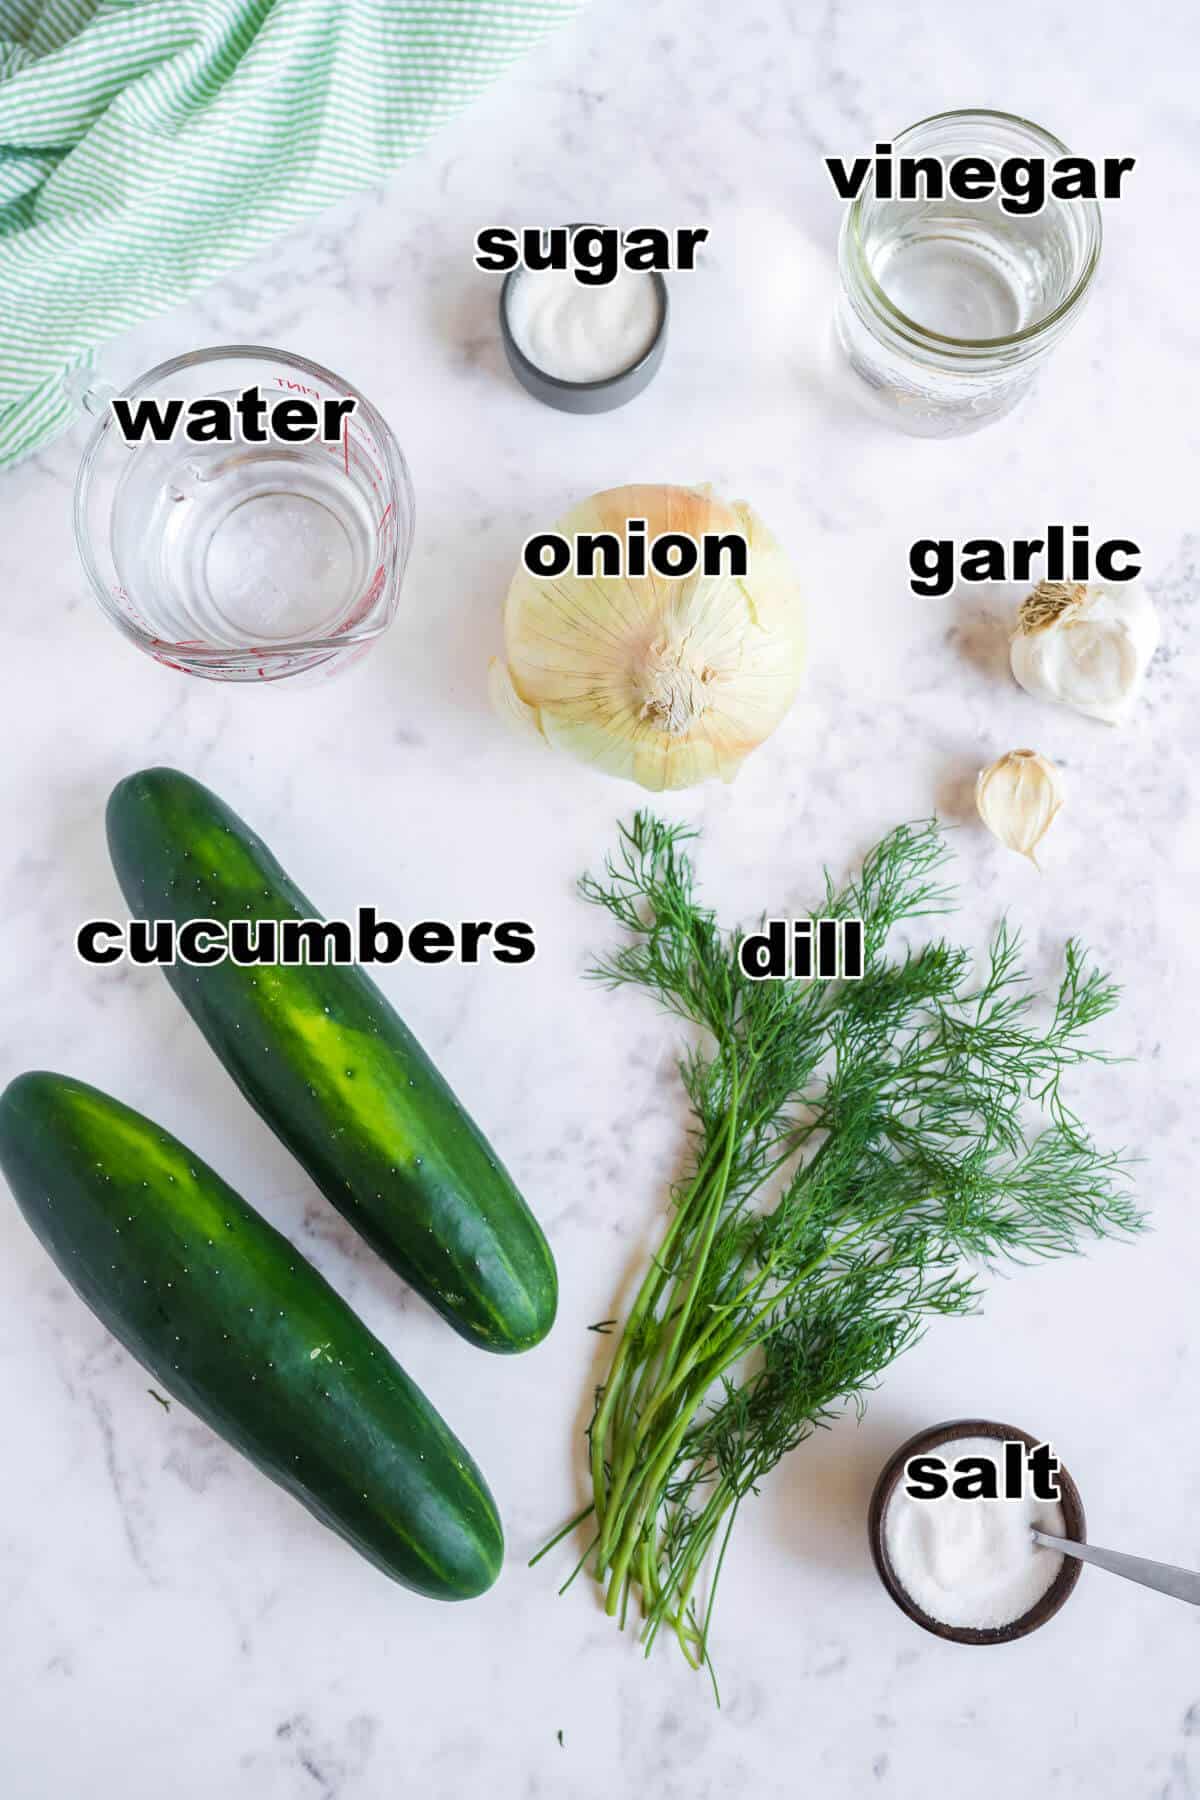 ingredients to make overnight pickles: cucumbers, onion, dill, garlic, water, vinegar, salt, and sugar